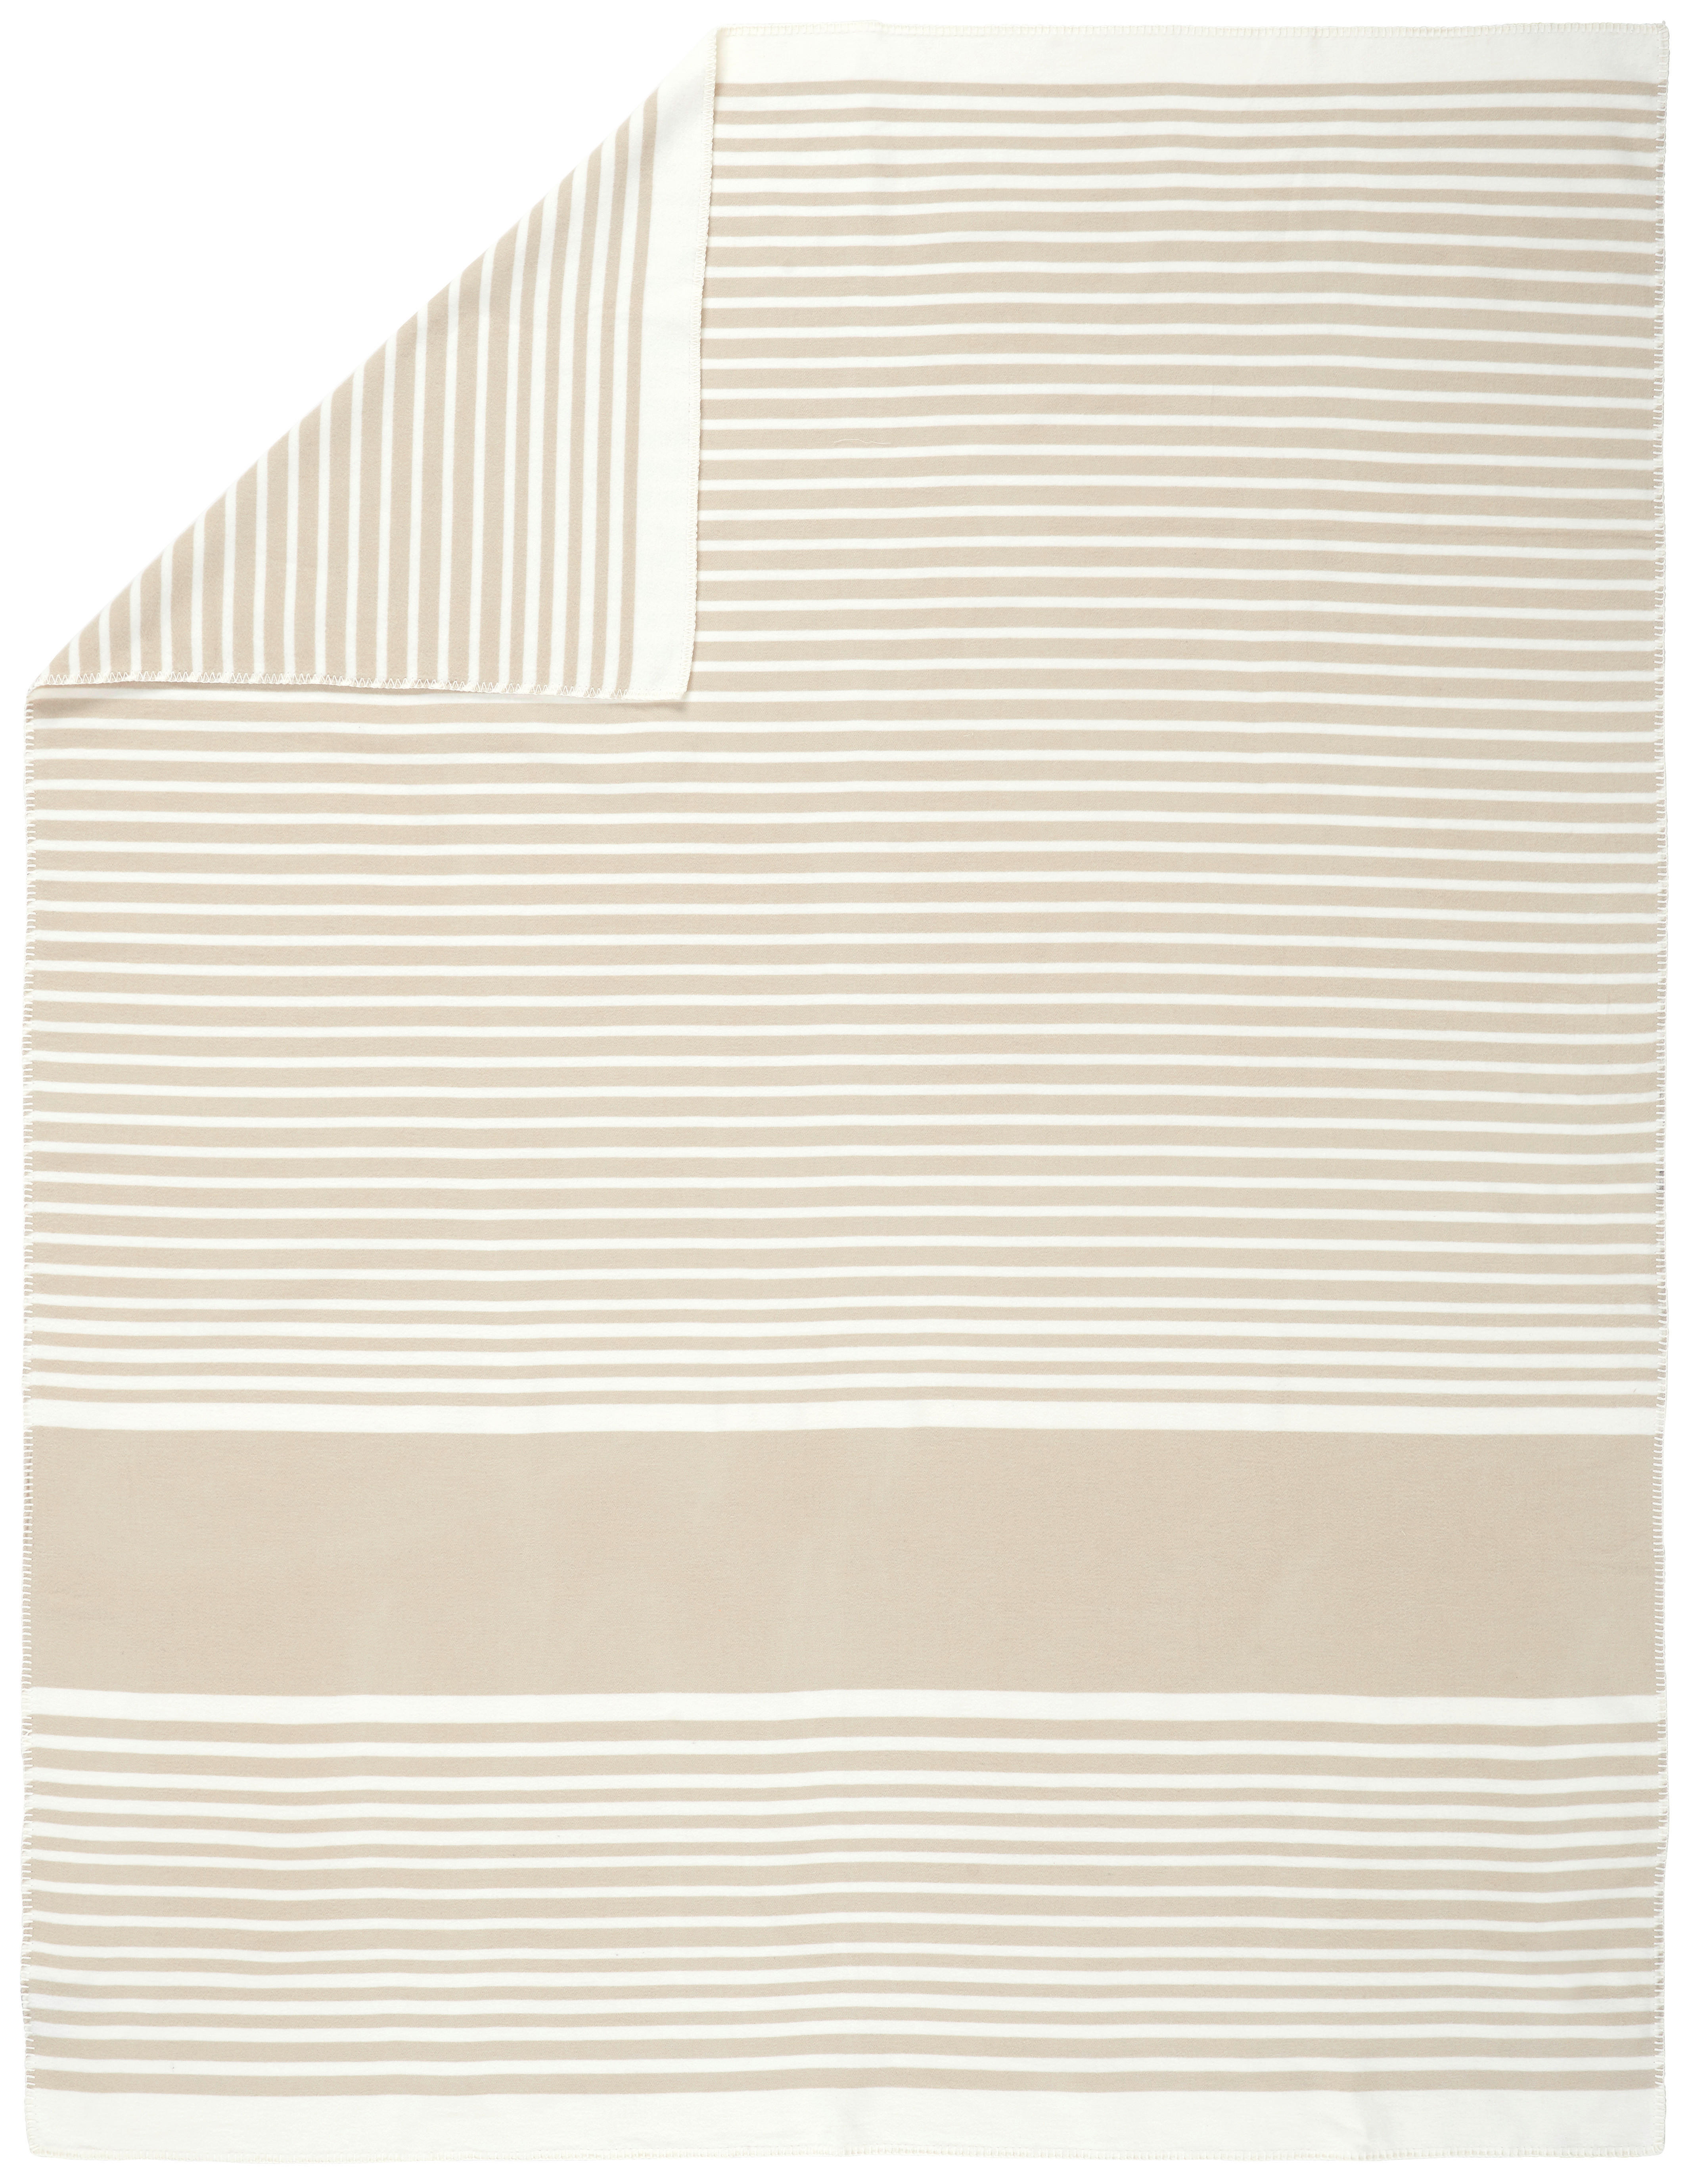 PLAID 150/200 cm  - Naturfarben/Weiß, Basics, Textil (150/200cm) - Bio:Vio